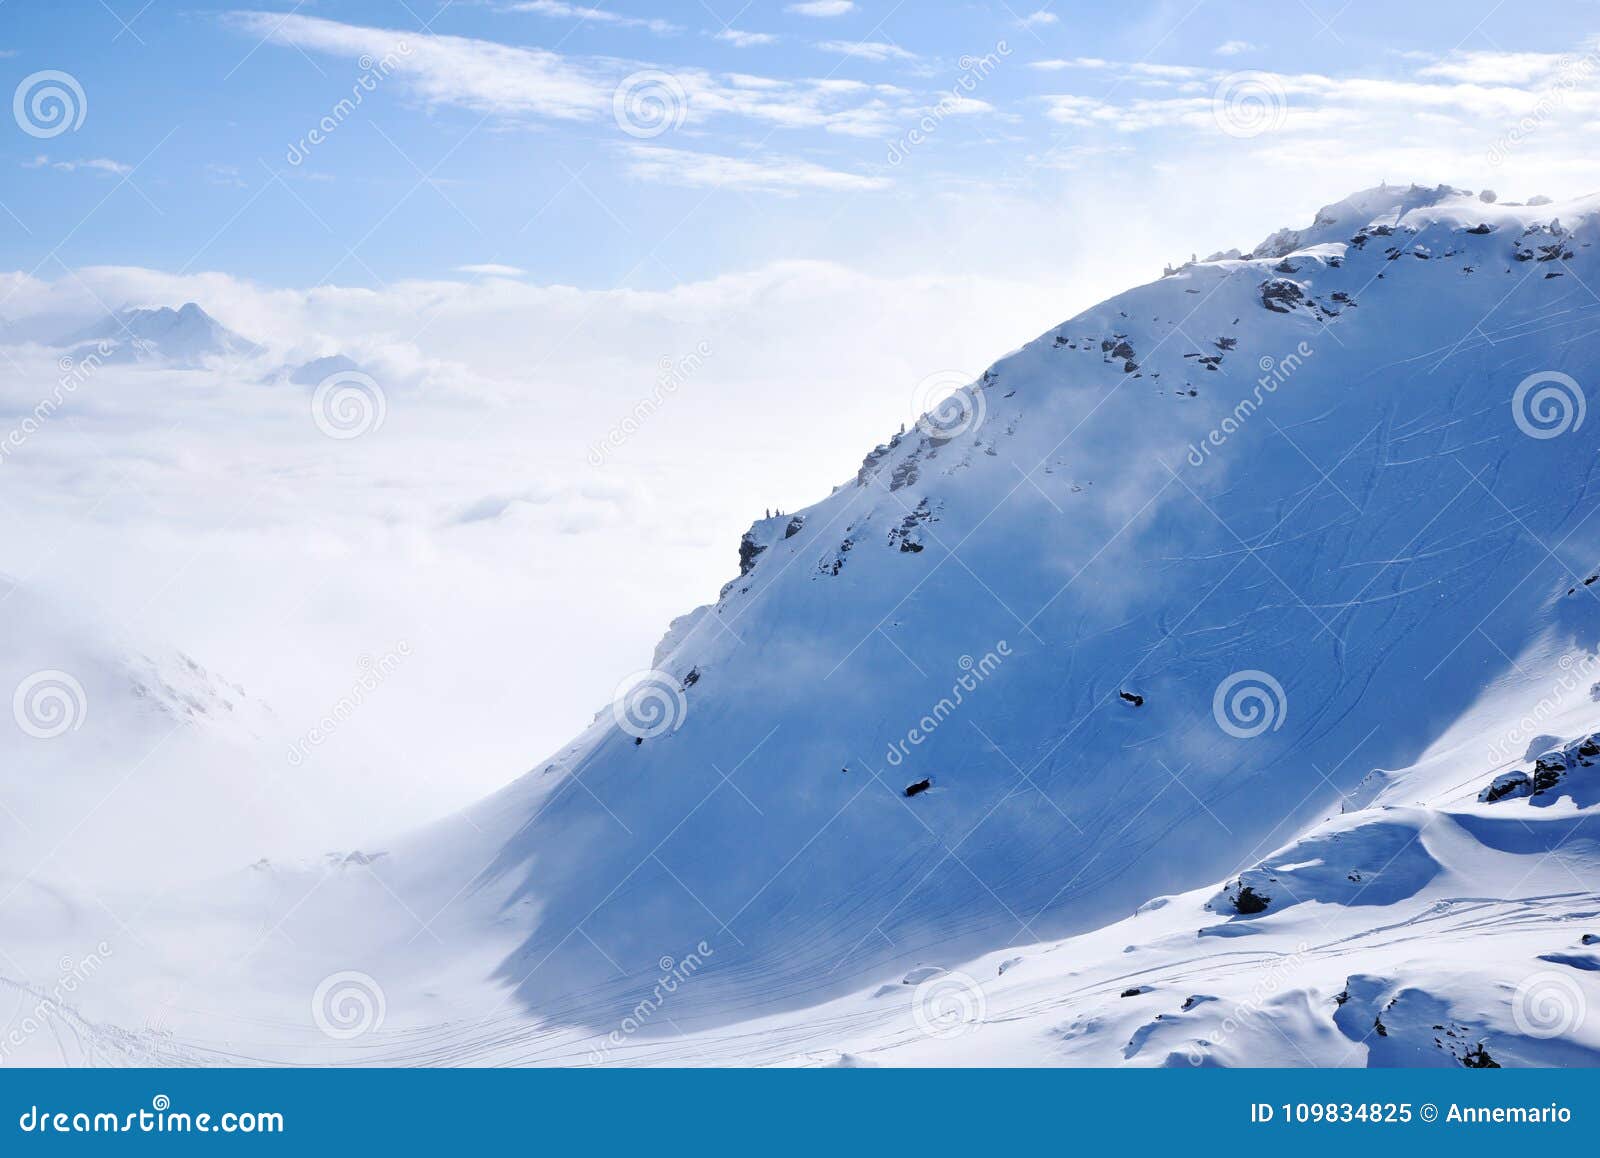 snow mountain range landscape in austria